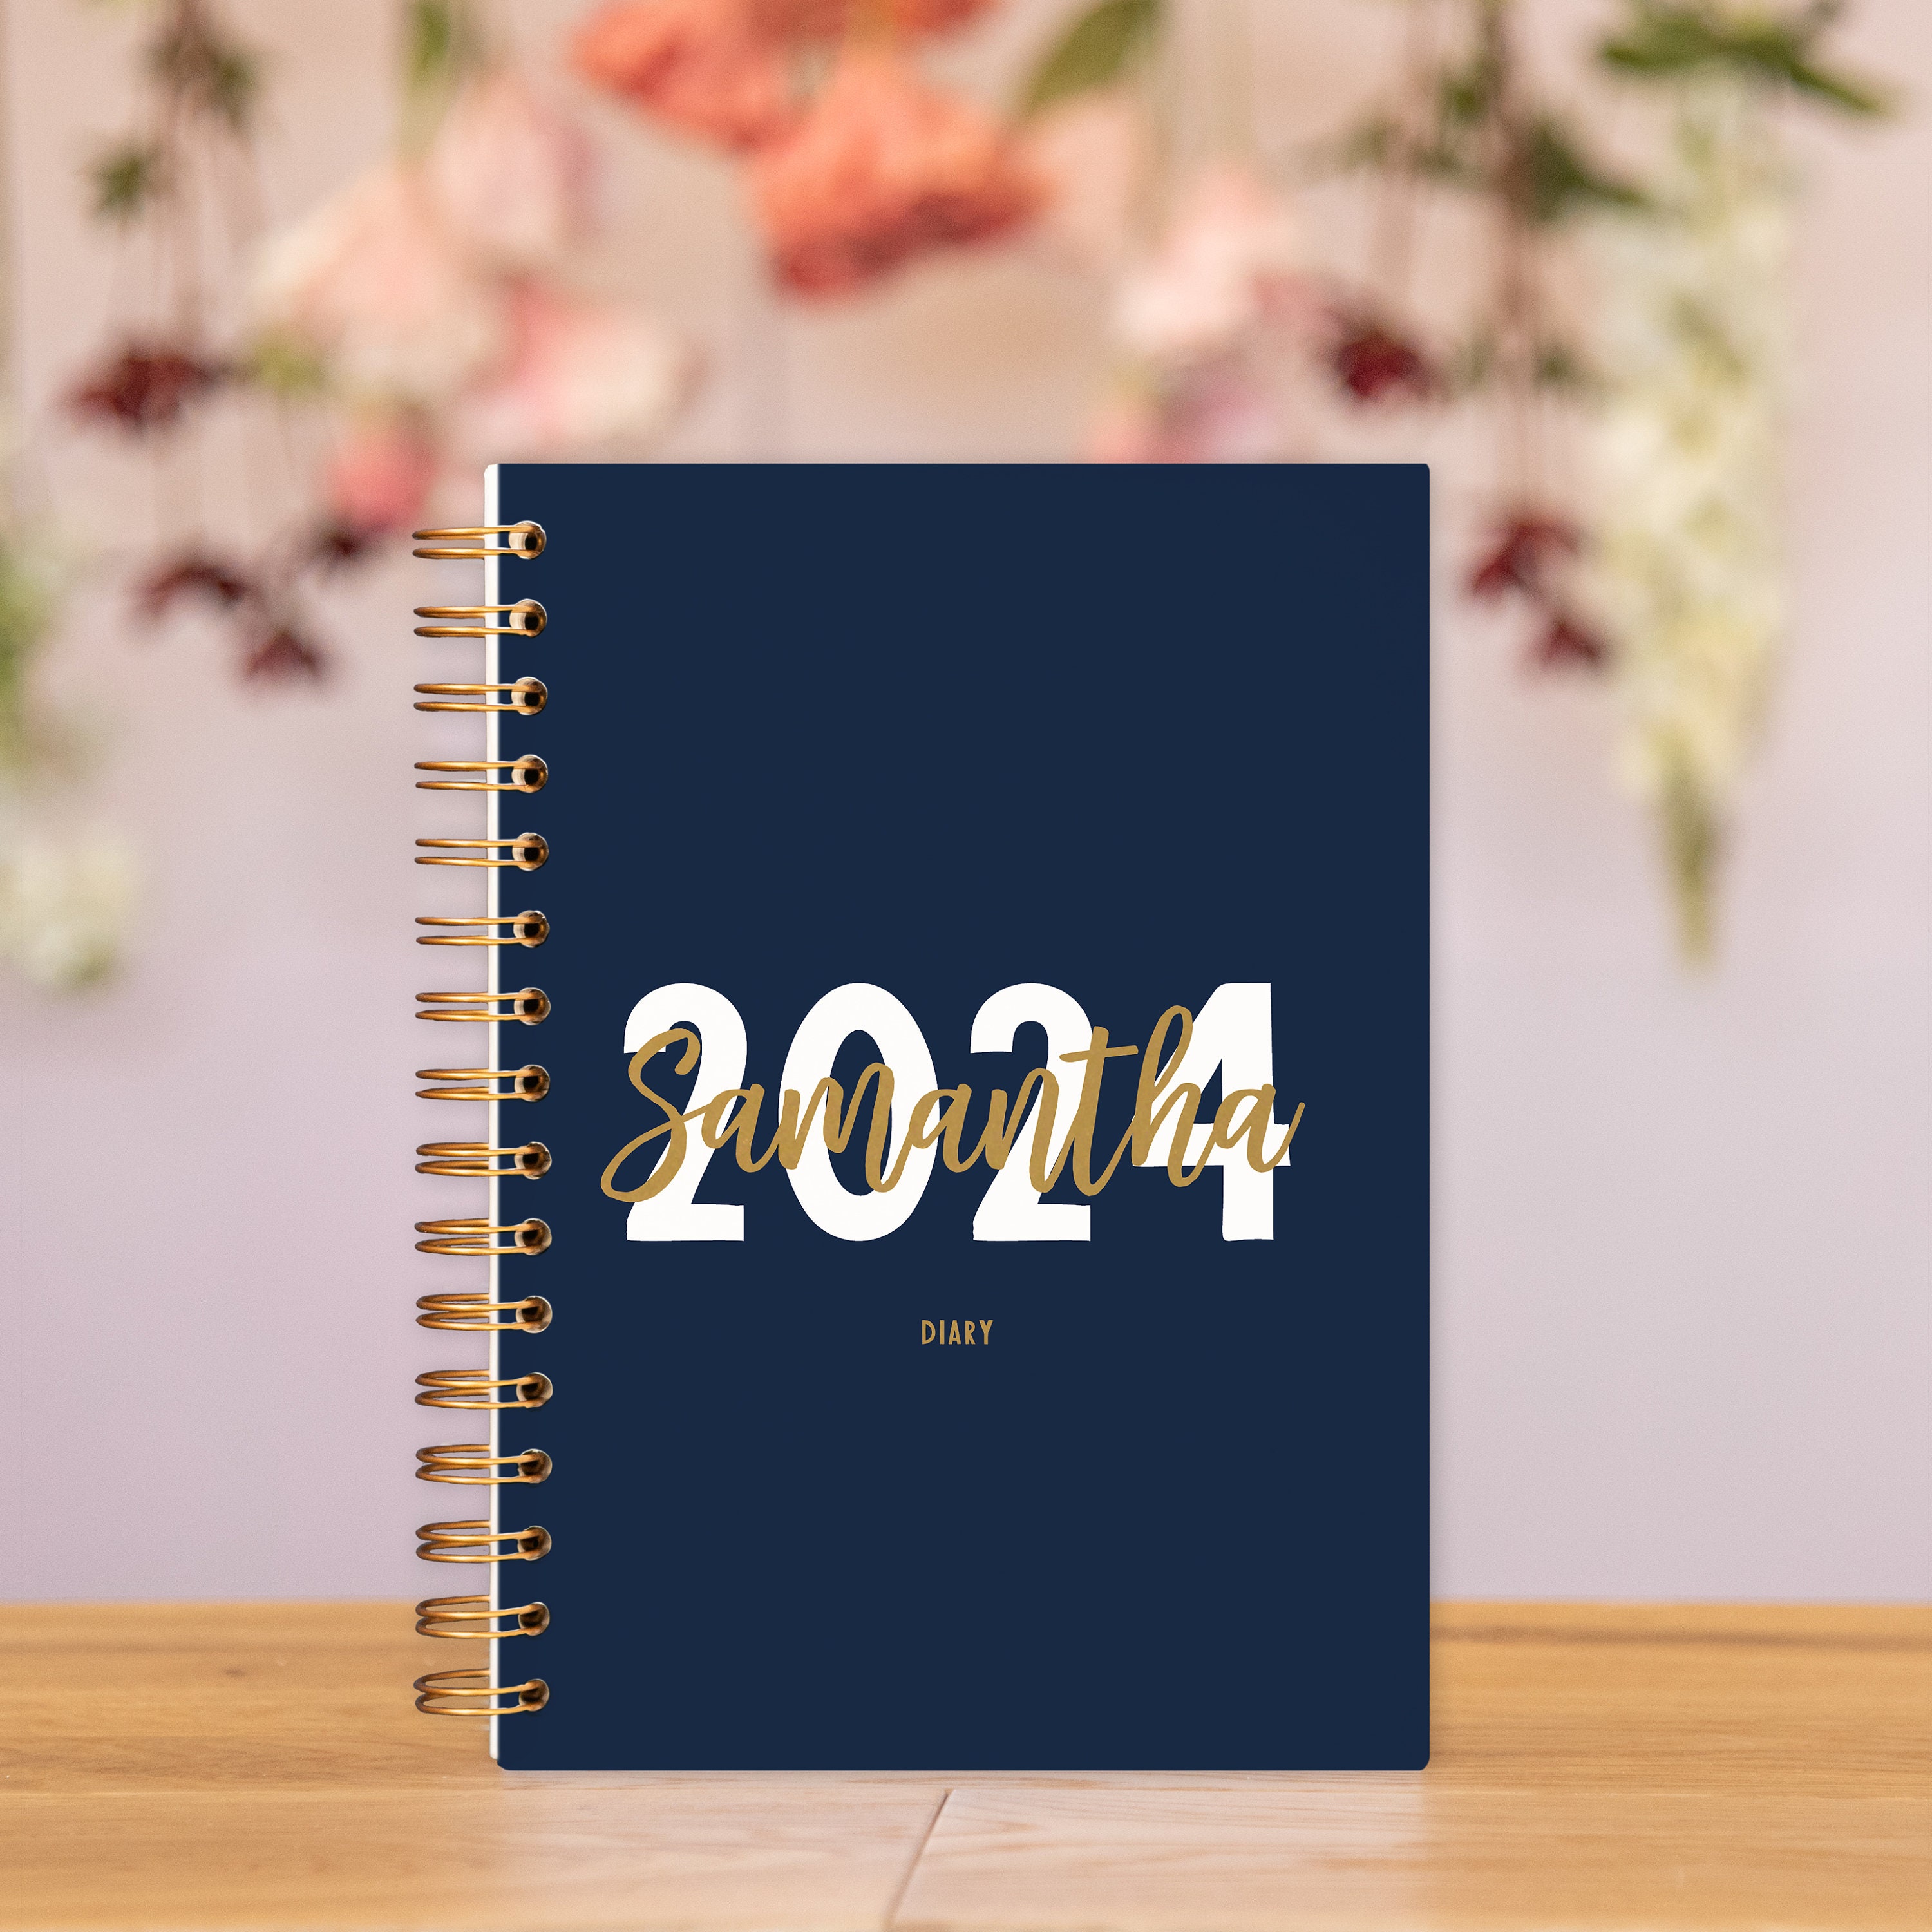 Basic diary 2024 Week view - My big achievements start here